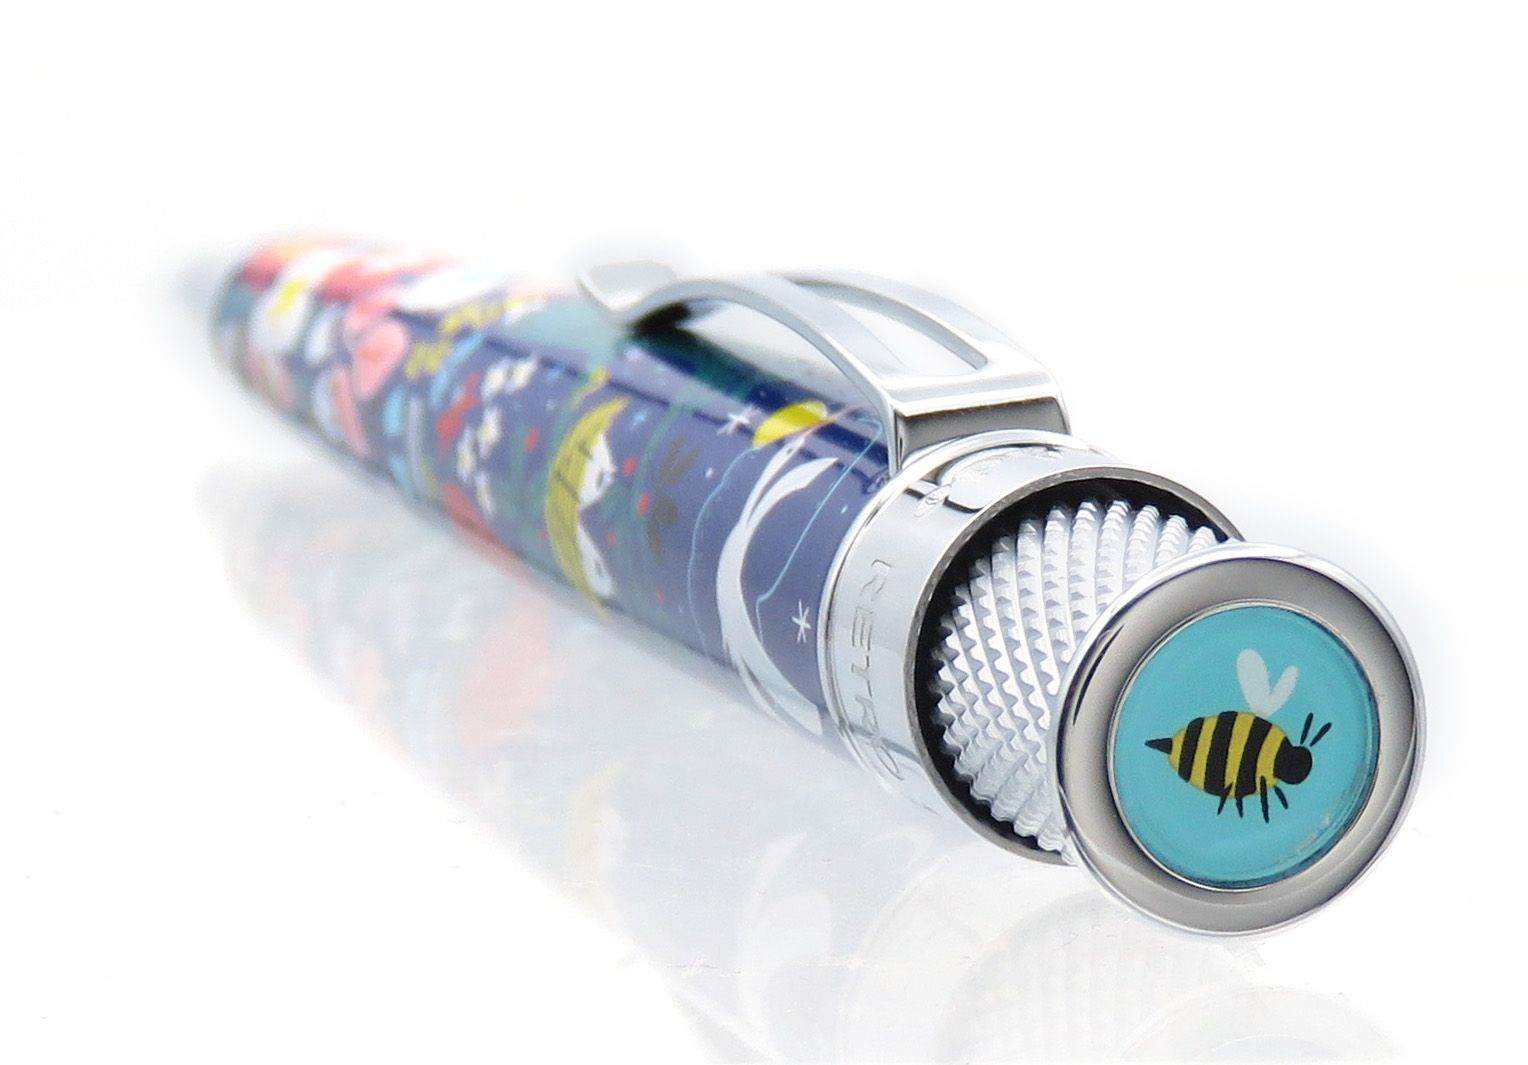 Honey Bee Pen Kits Rollerball